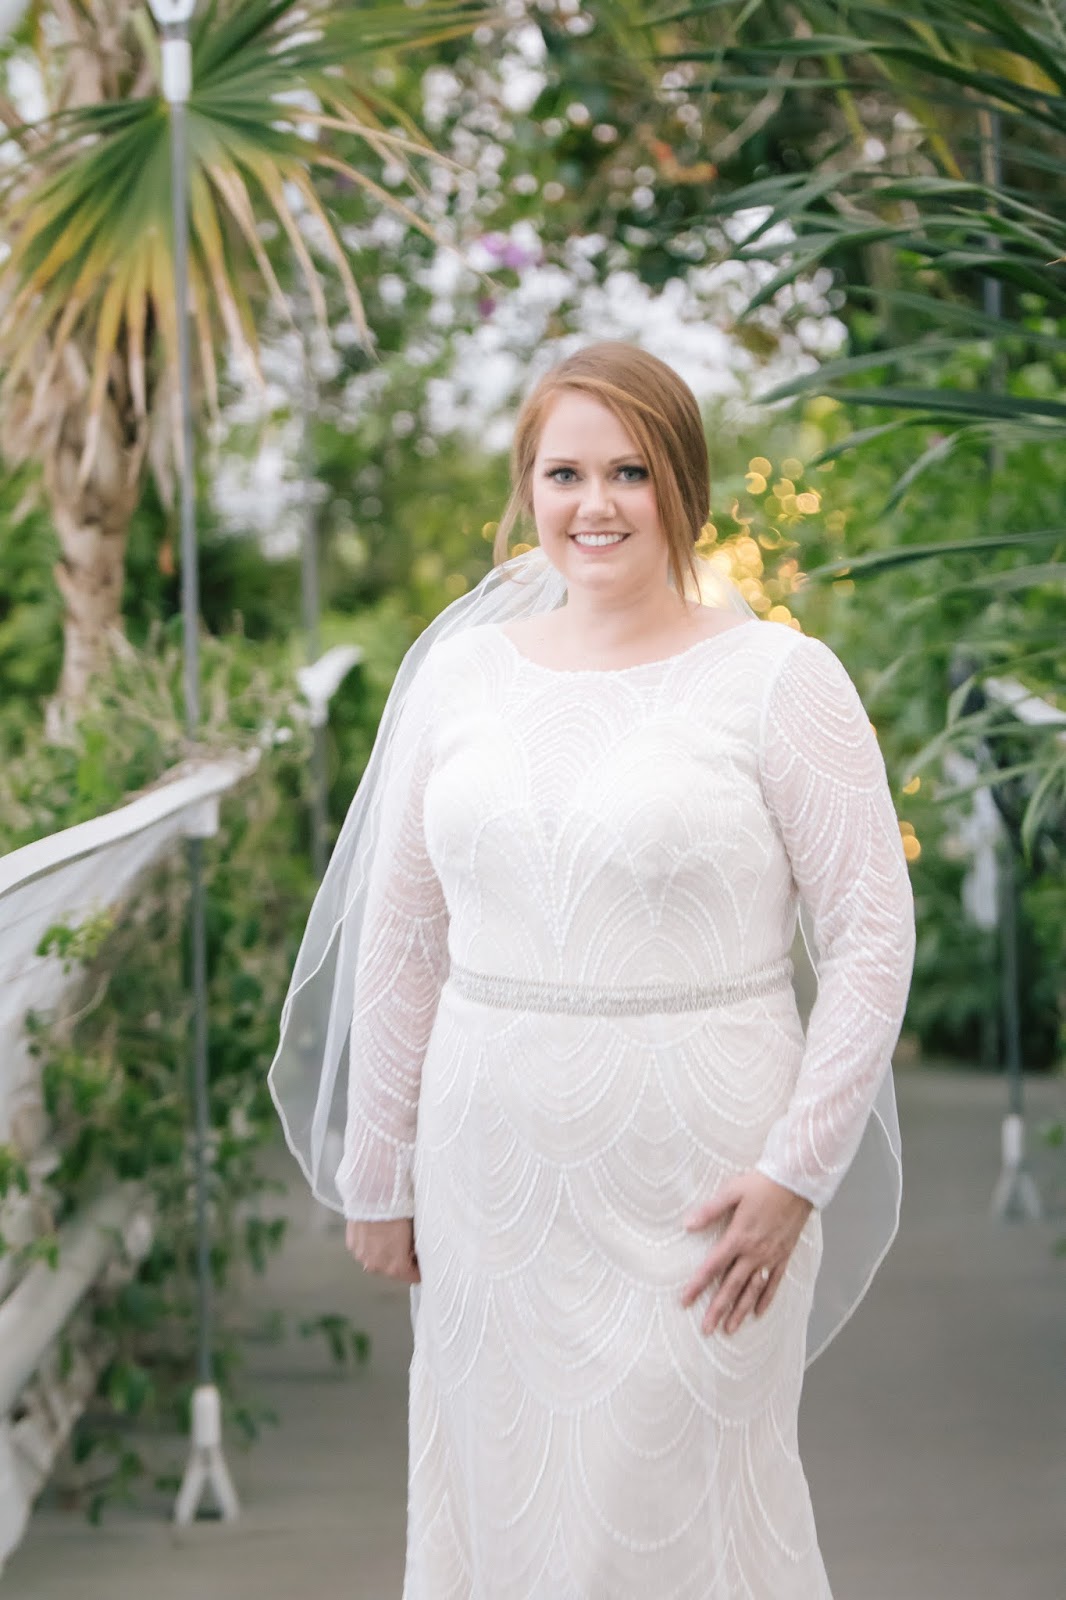 From Britt's Eye View: A beautiful bride at the Myriad Botanical Gardens!